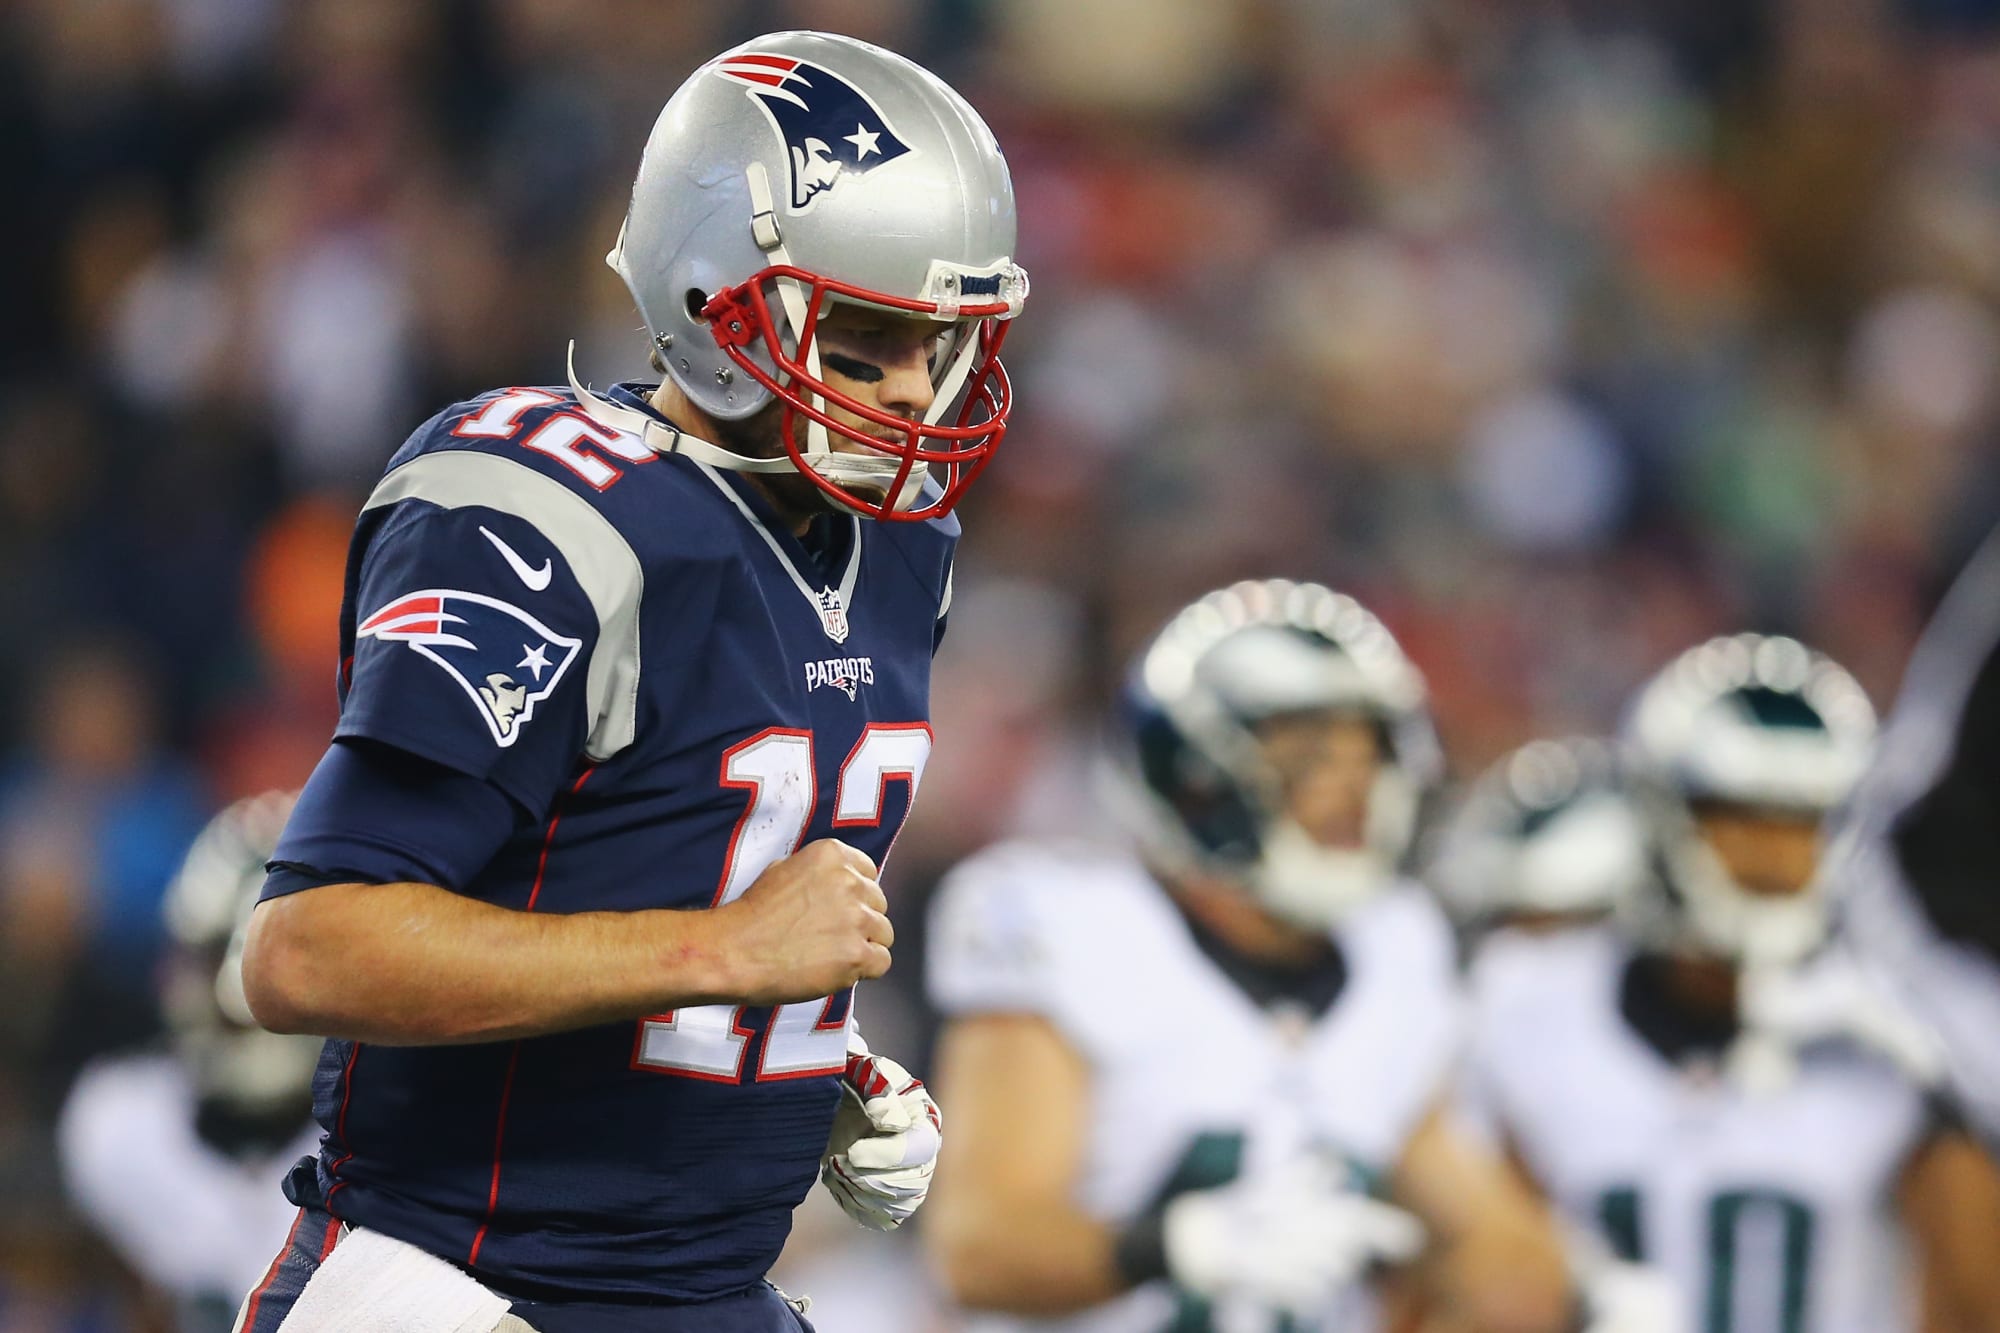 Eagles vs. Patriots live stream: Watch Super Bowl 52 online